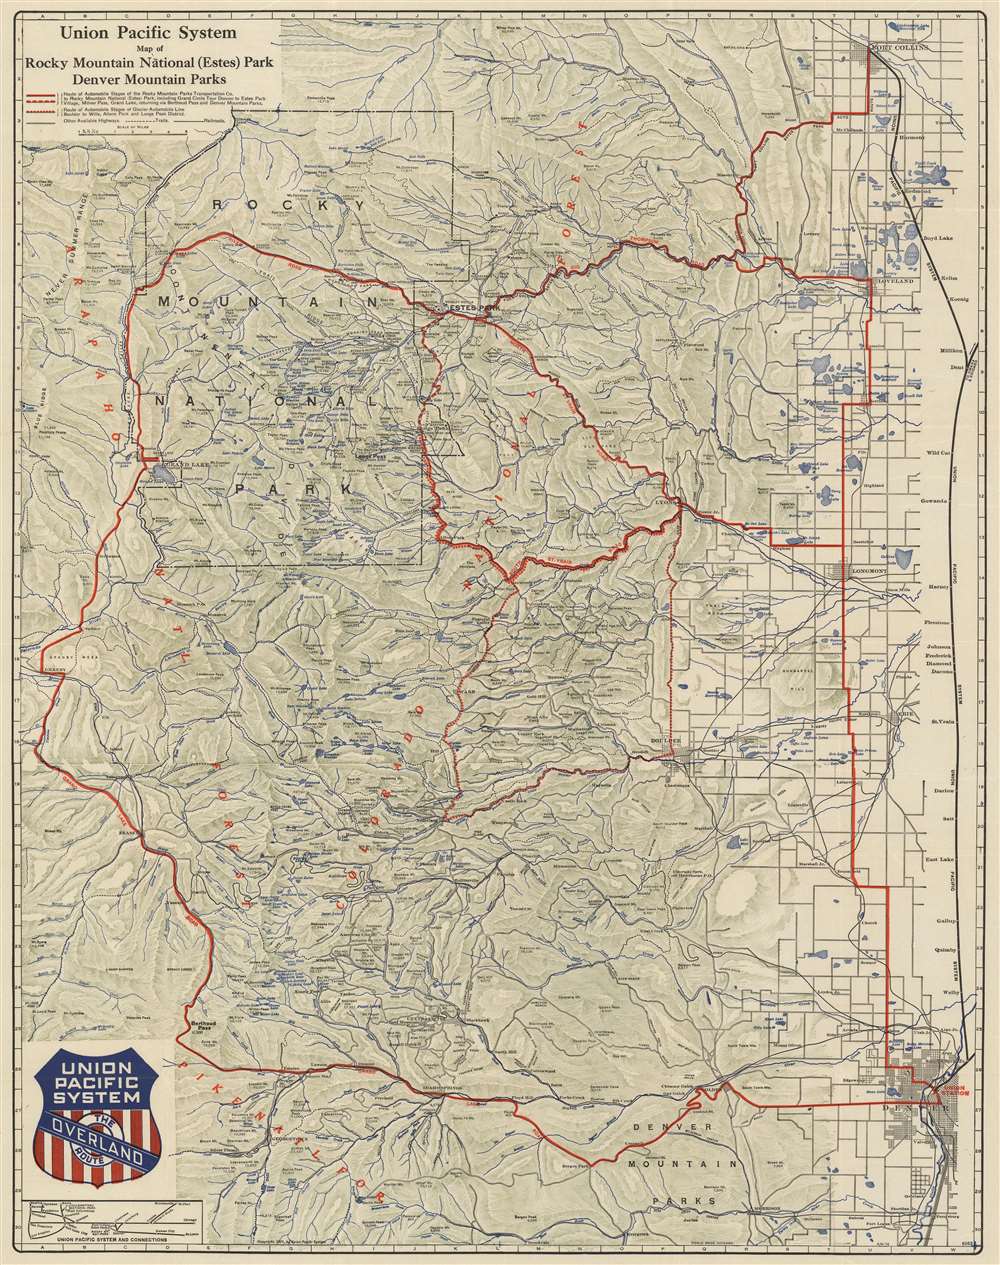 Union Pacific System Map of Rocky Mountain National (Estes) Park Denver Mountain Parks. - Main View